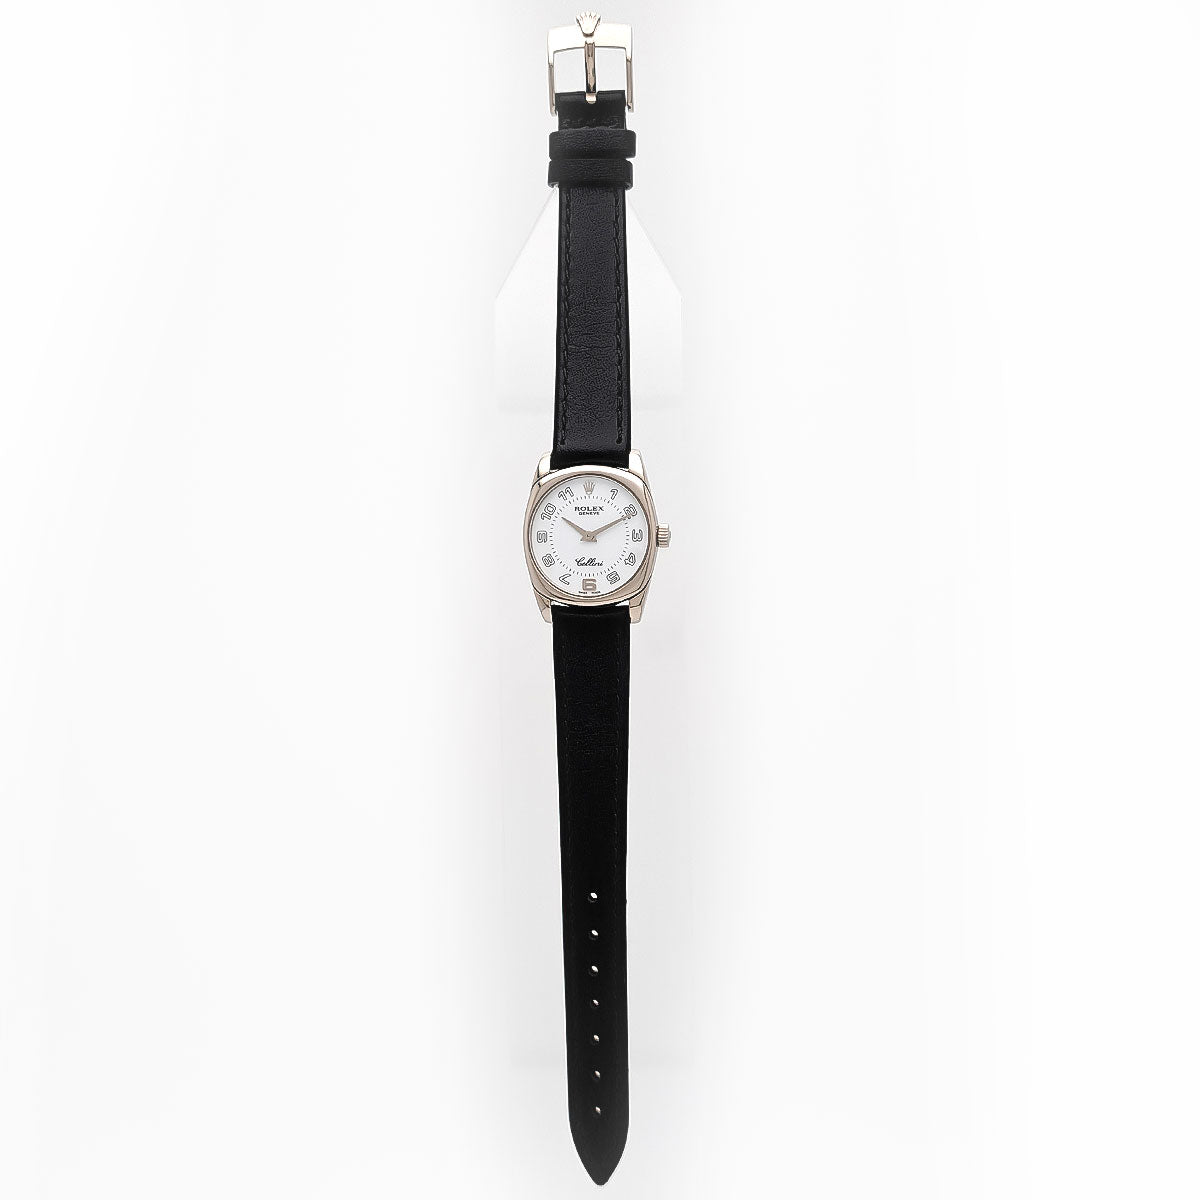 Quartz Cellini Danaos Wrist Watch  6229.0